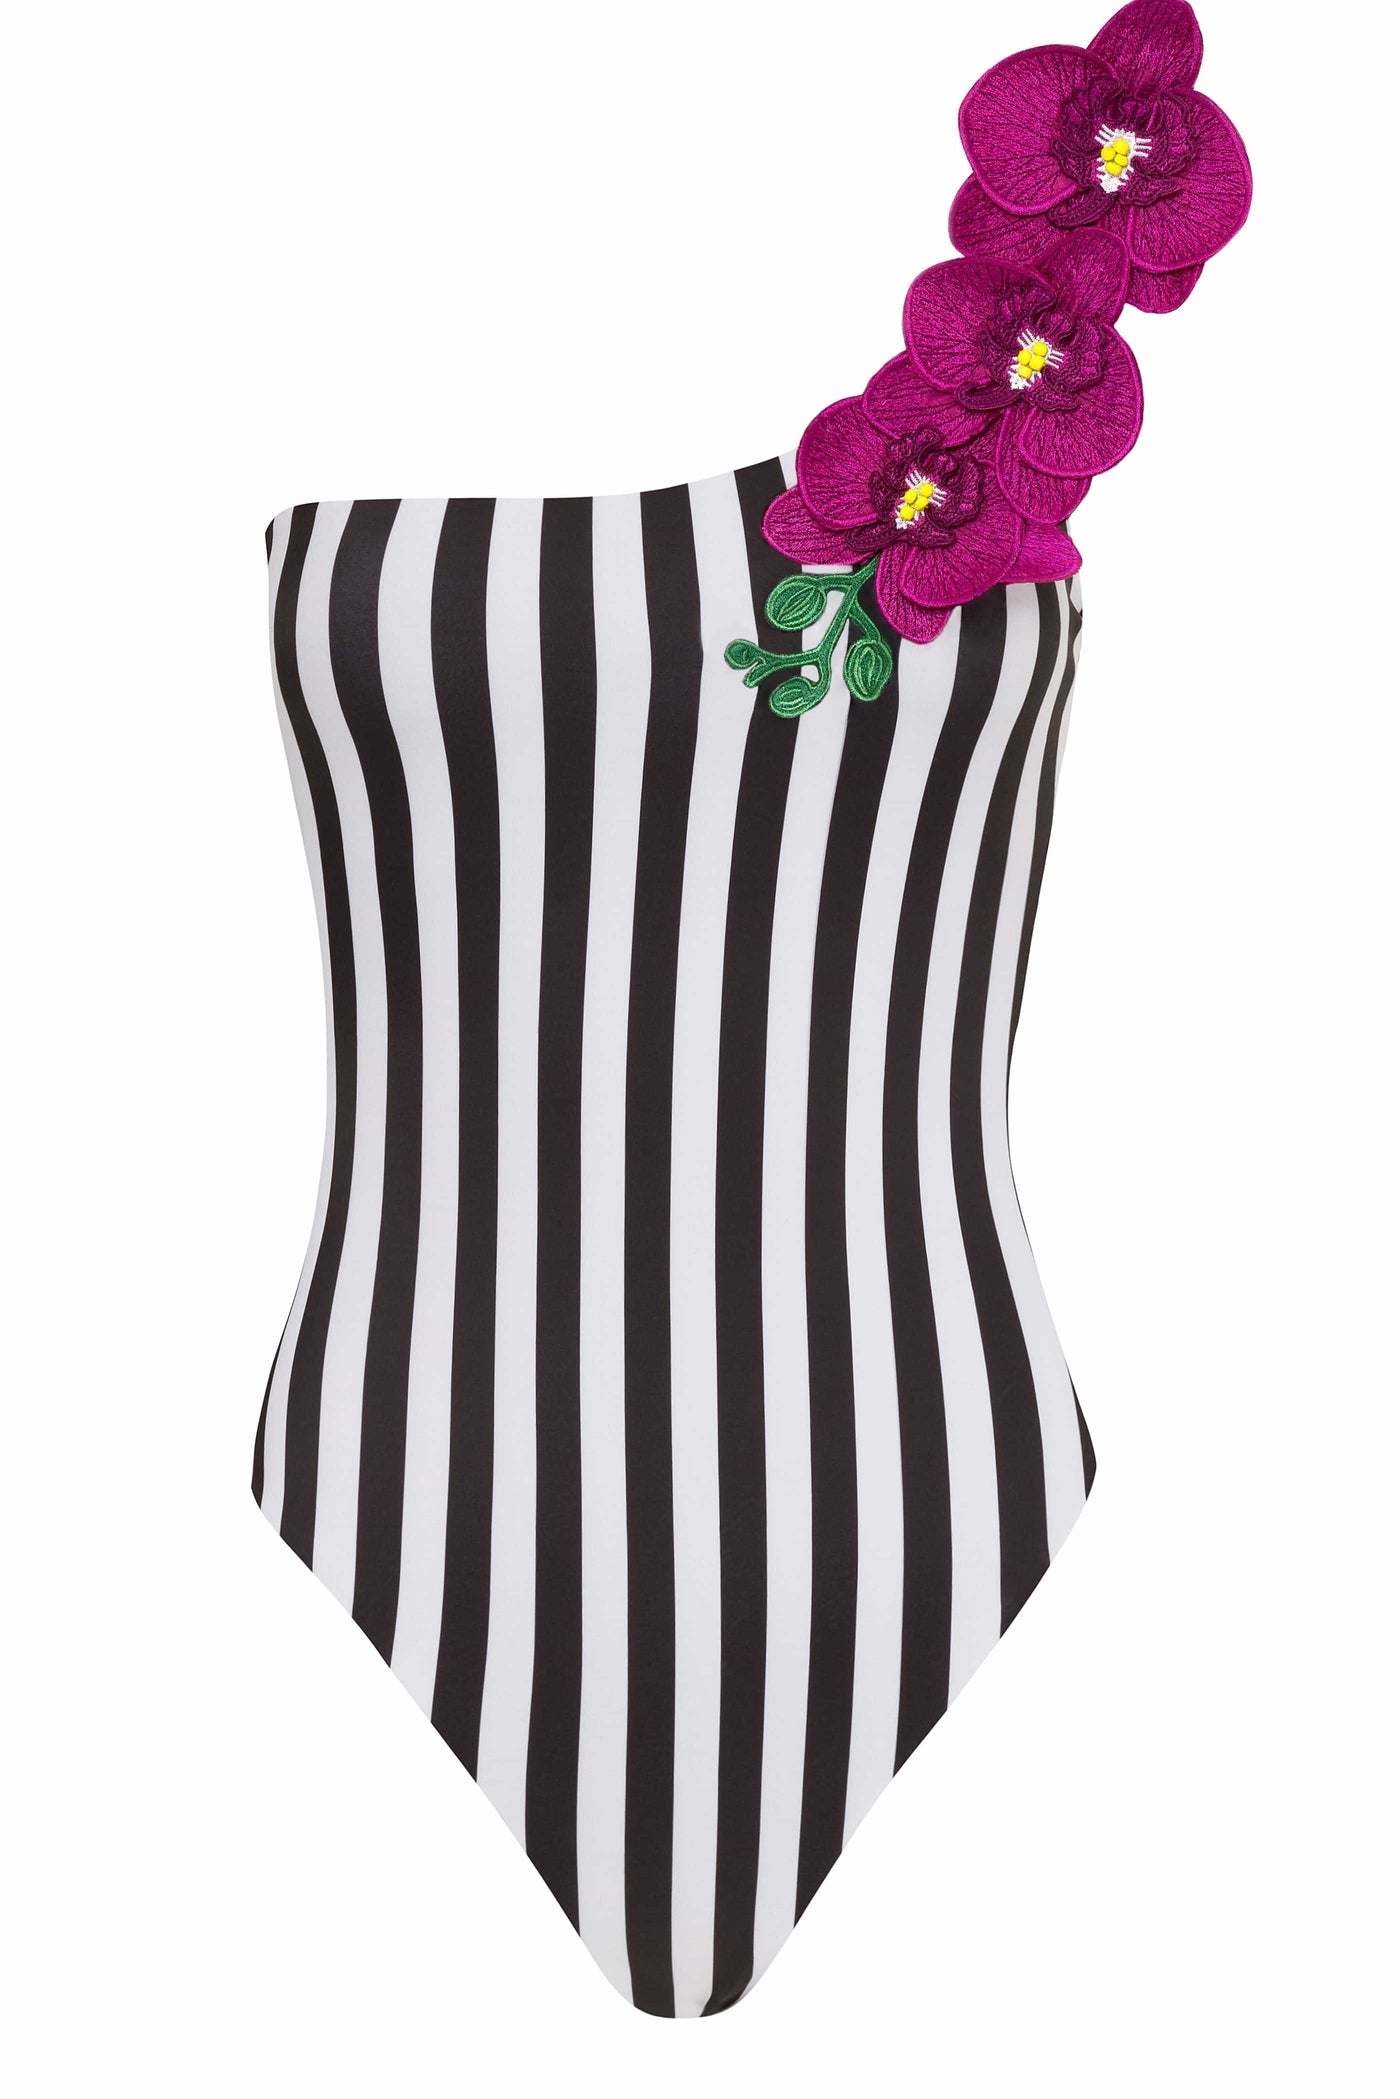 Swimwear Stripe / XS Vanda Black & White Stripe One Piece Swimsuit 2022 Nikoza Swimwear Vanda Black White Stripe One Piece Swimsuit Olga Nikoza Swimwear